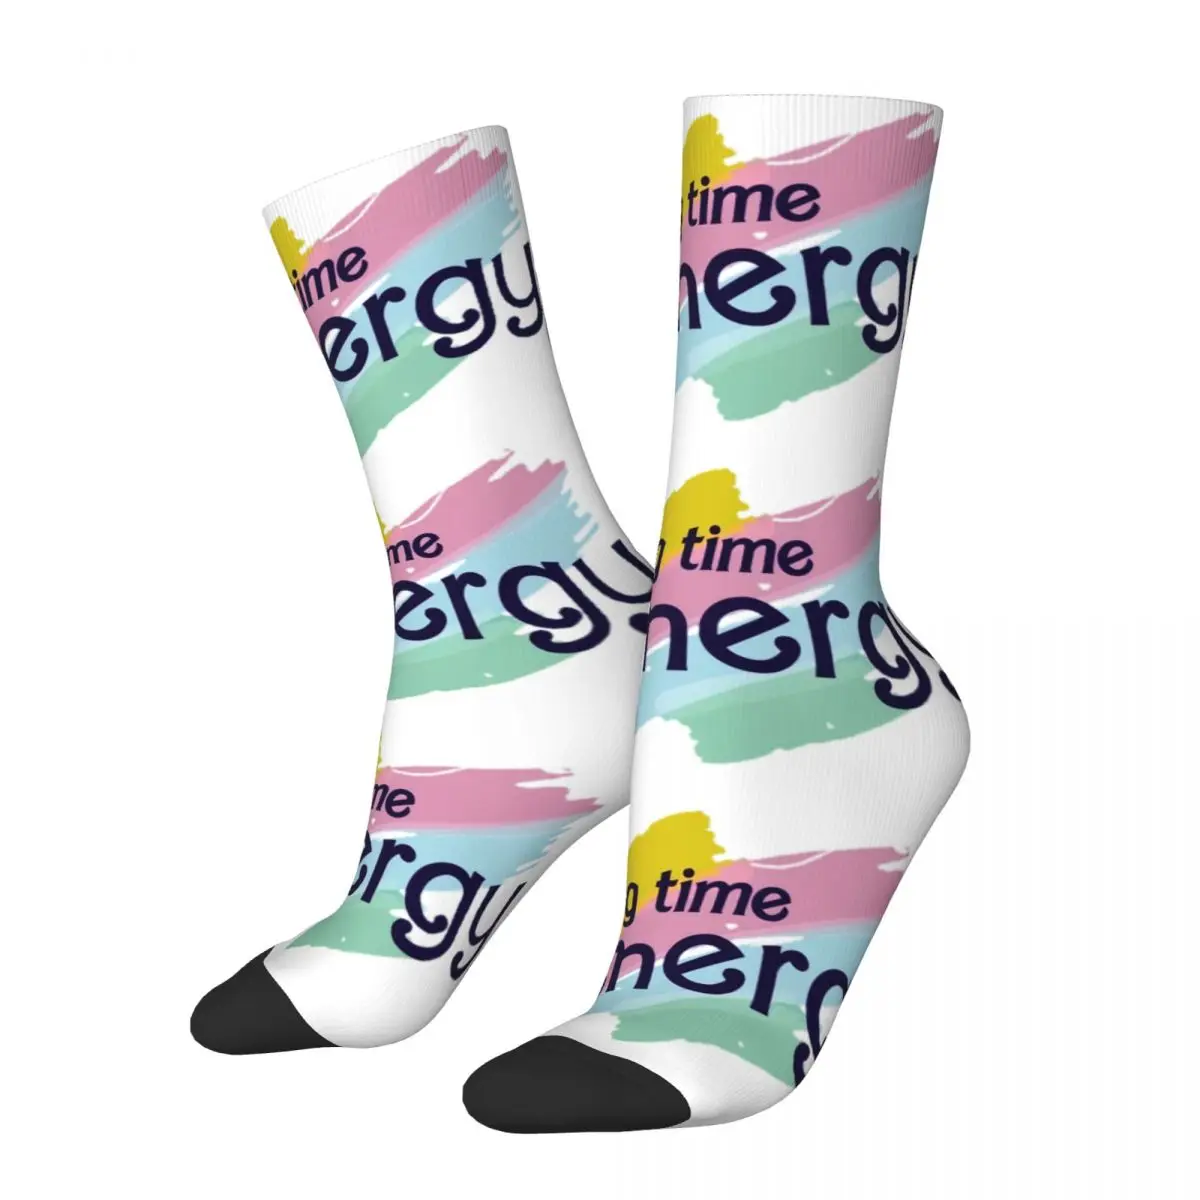 

Big Time Kenergy Theme Design All Season Socks Merch for Women Compression Dress Socks